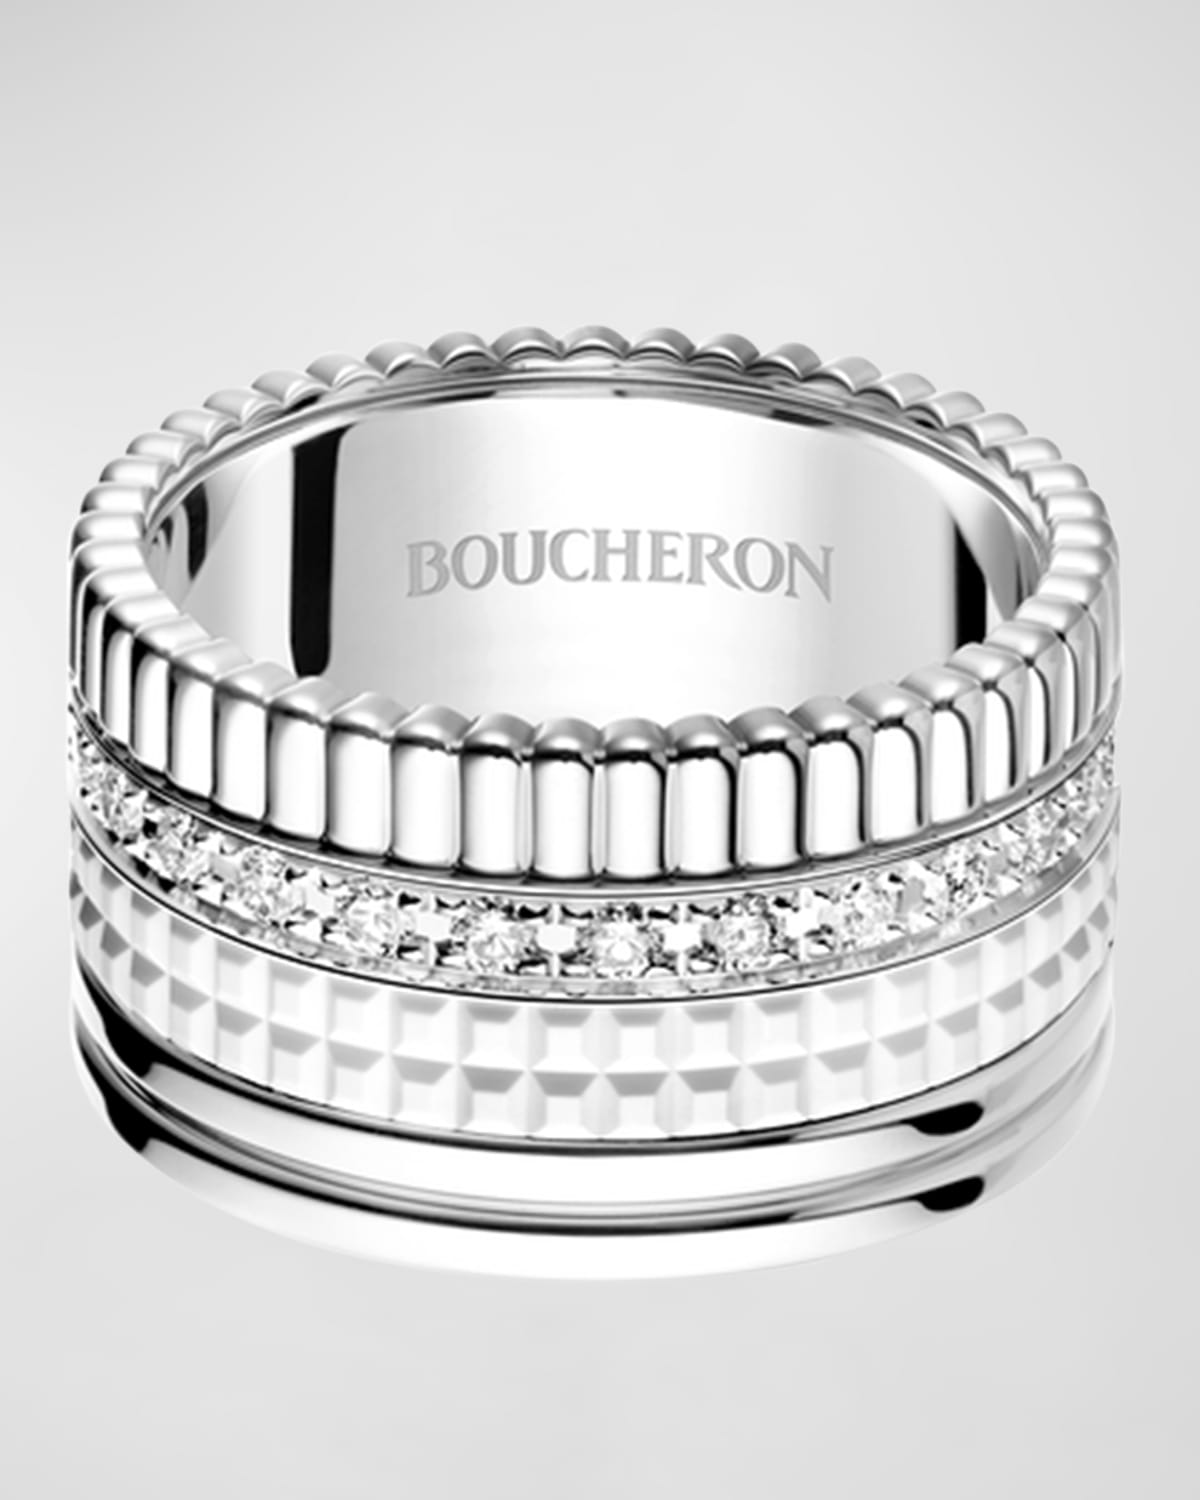 BOUCHERON QUATRE DOUBLE WHITE DIAMOND EDITION WIDE RING, EU 53 / US 6.25